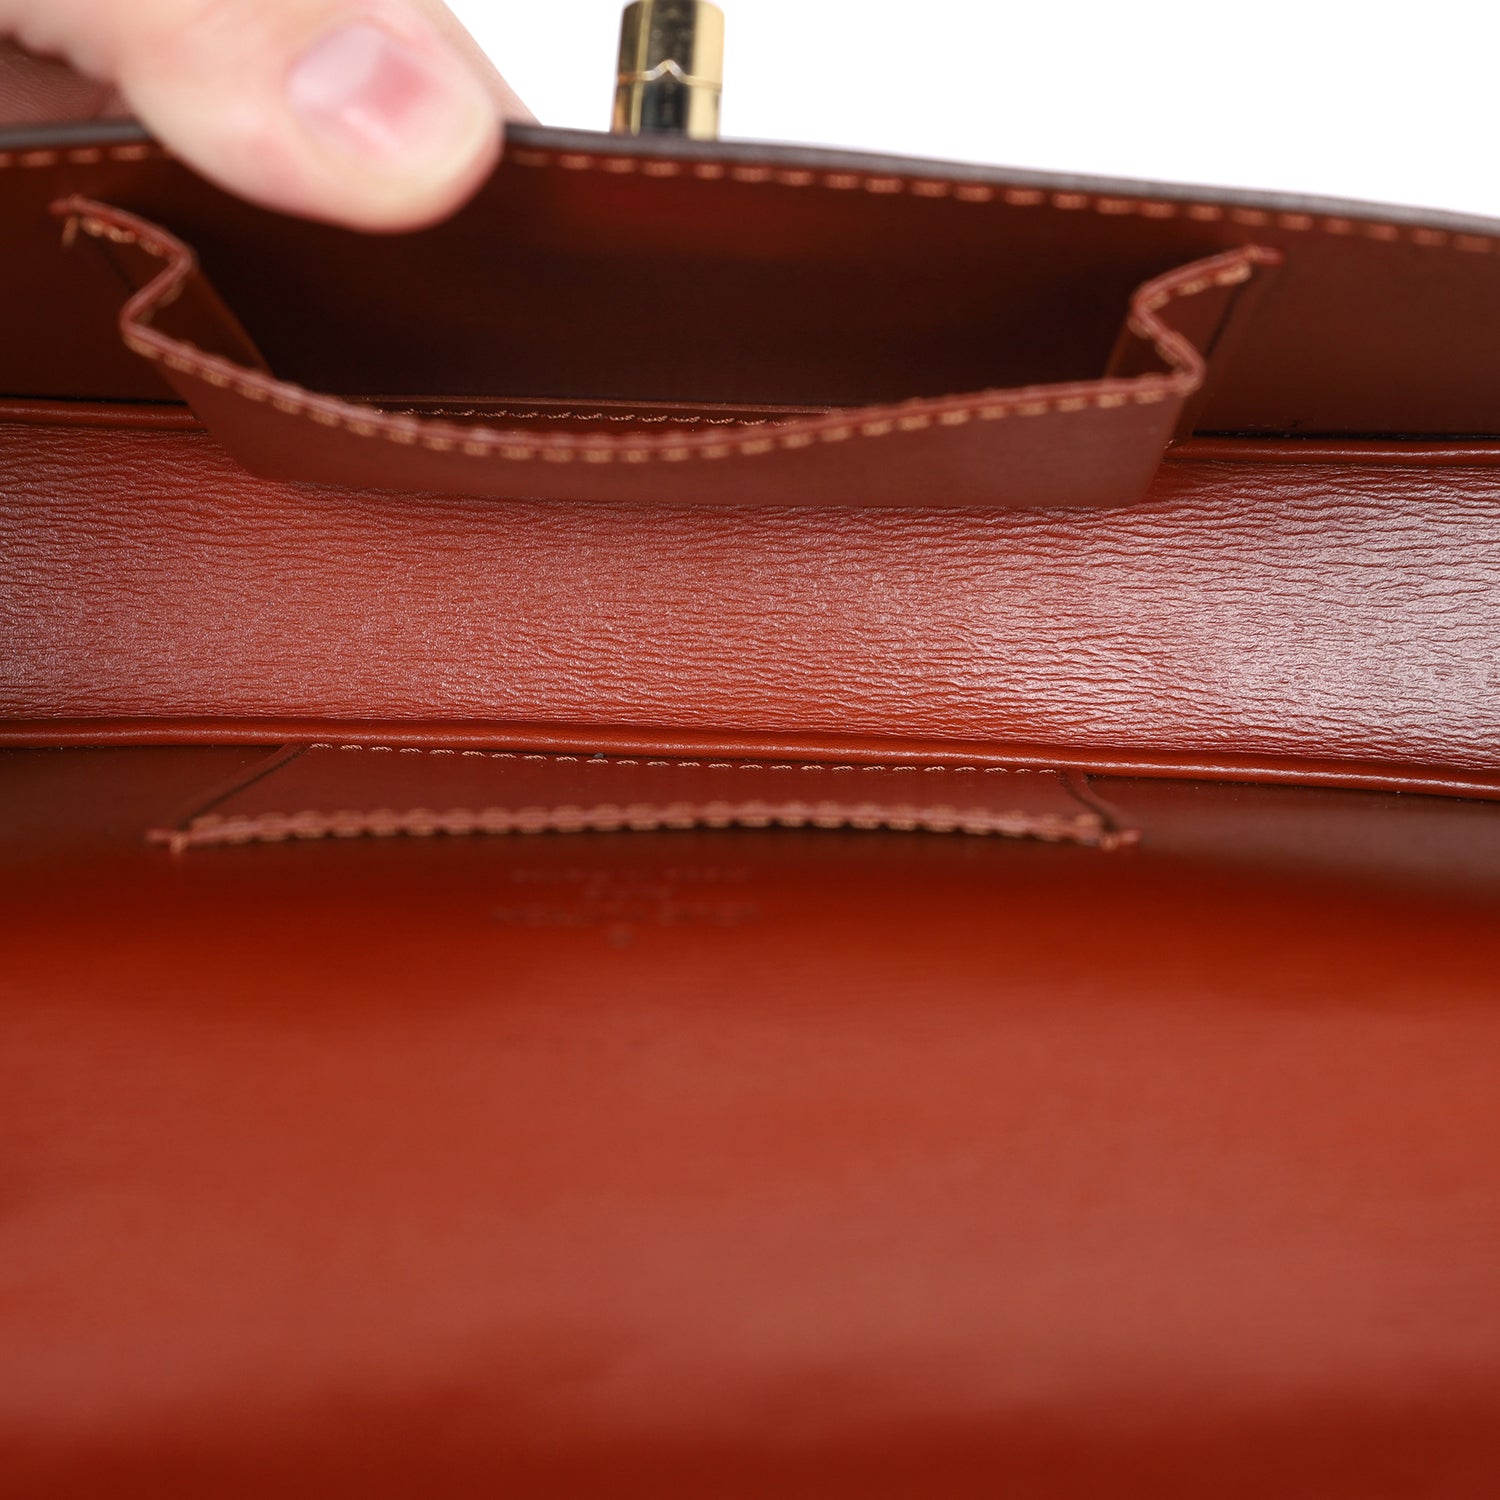 Brown Epi Leather Passport Wallet | savyshop